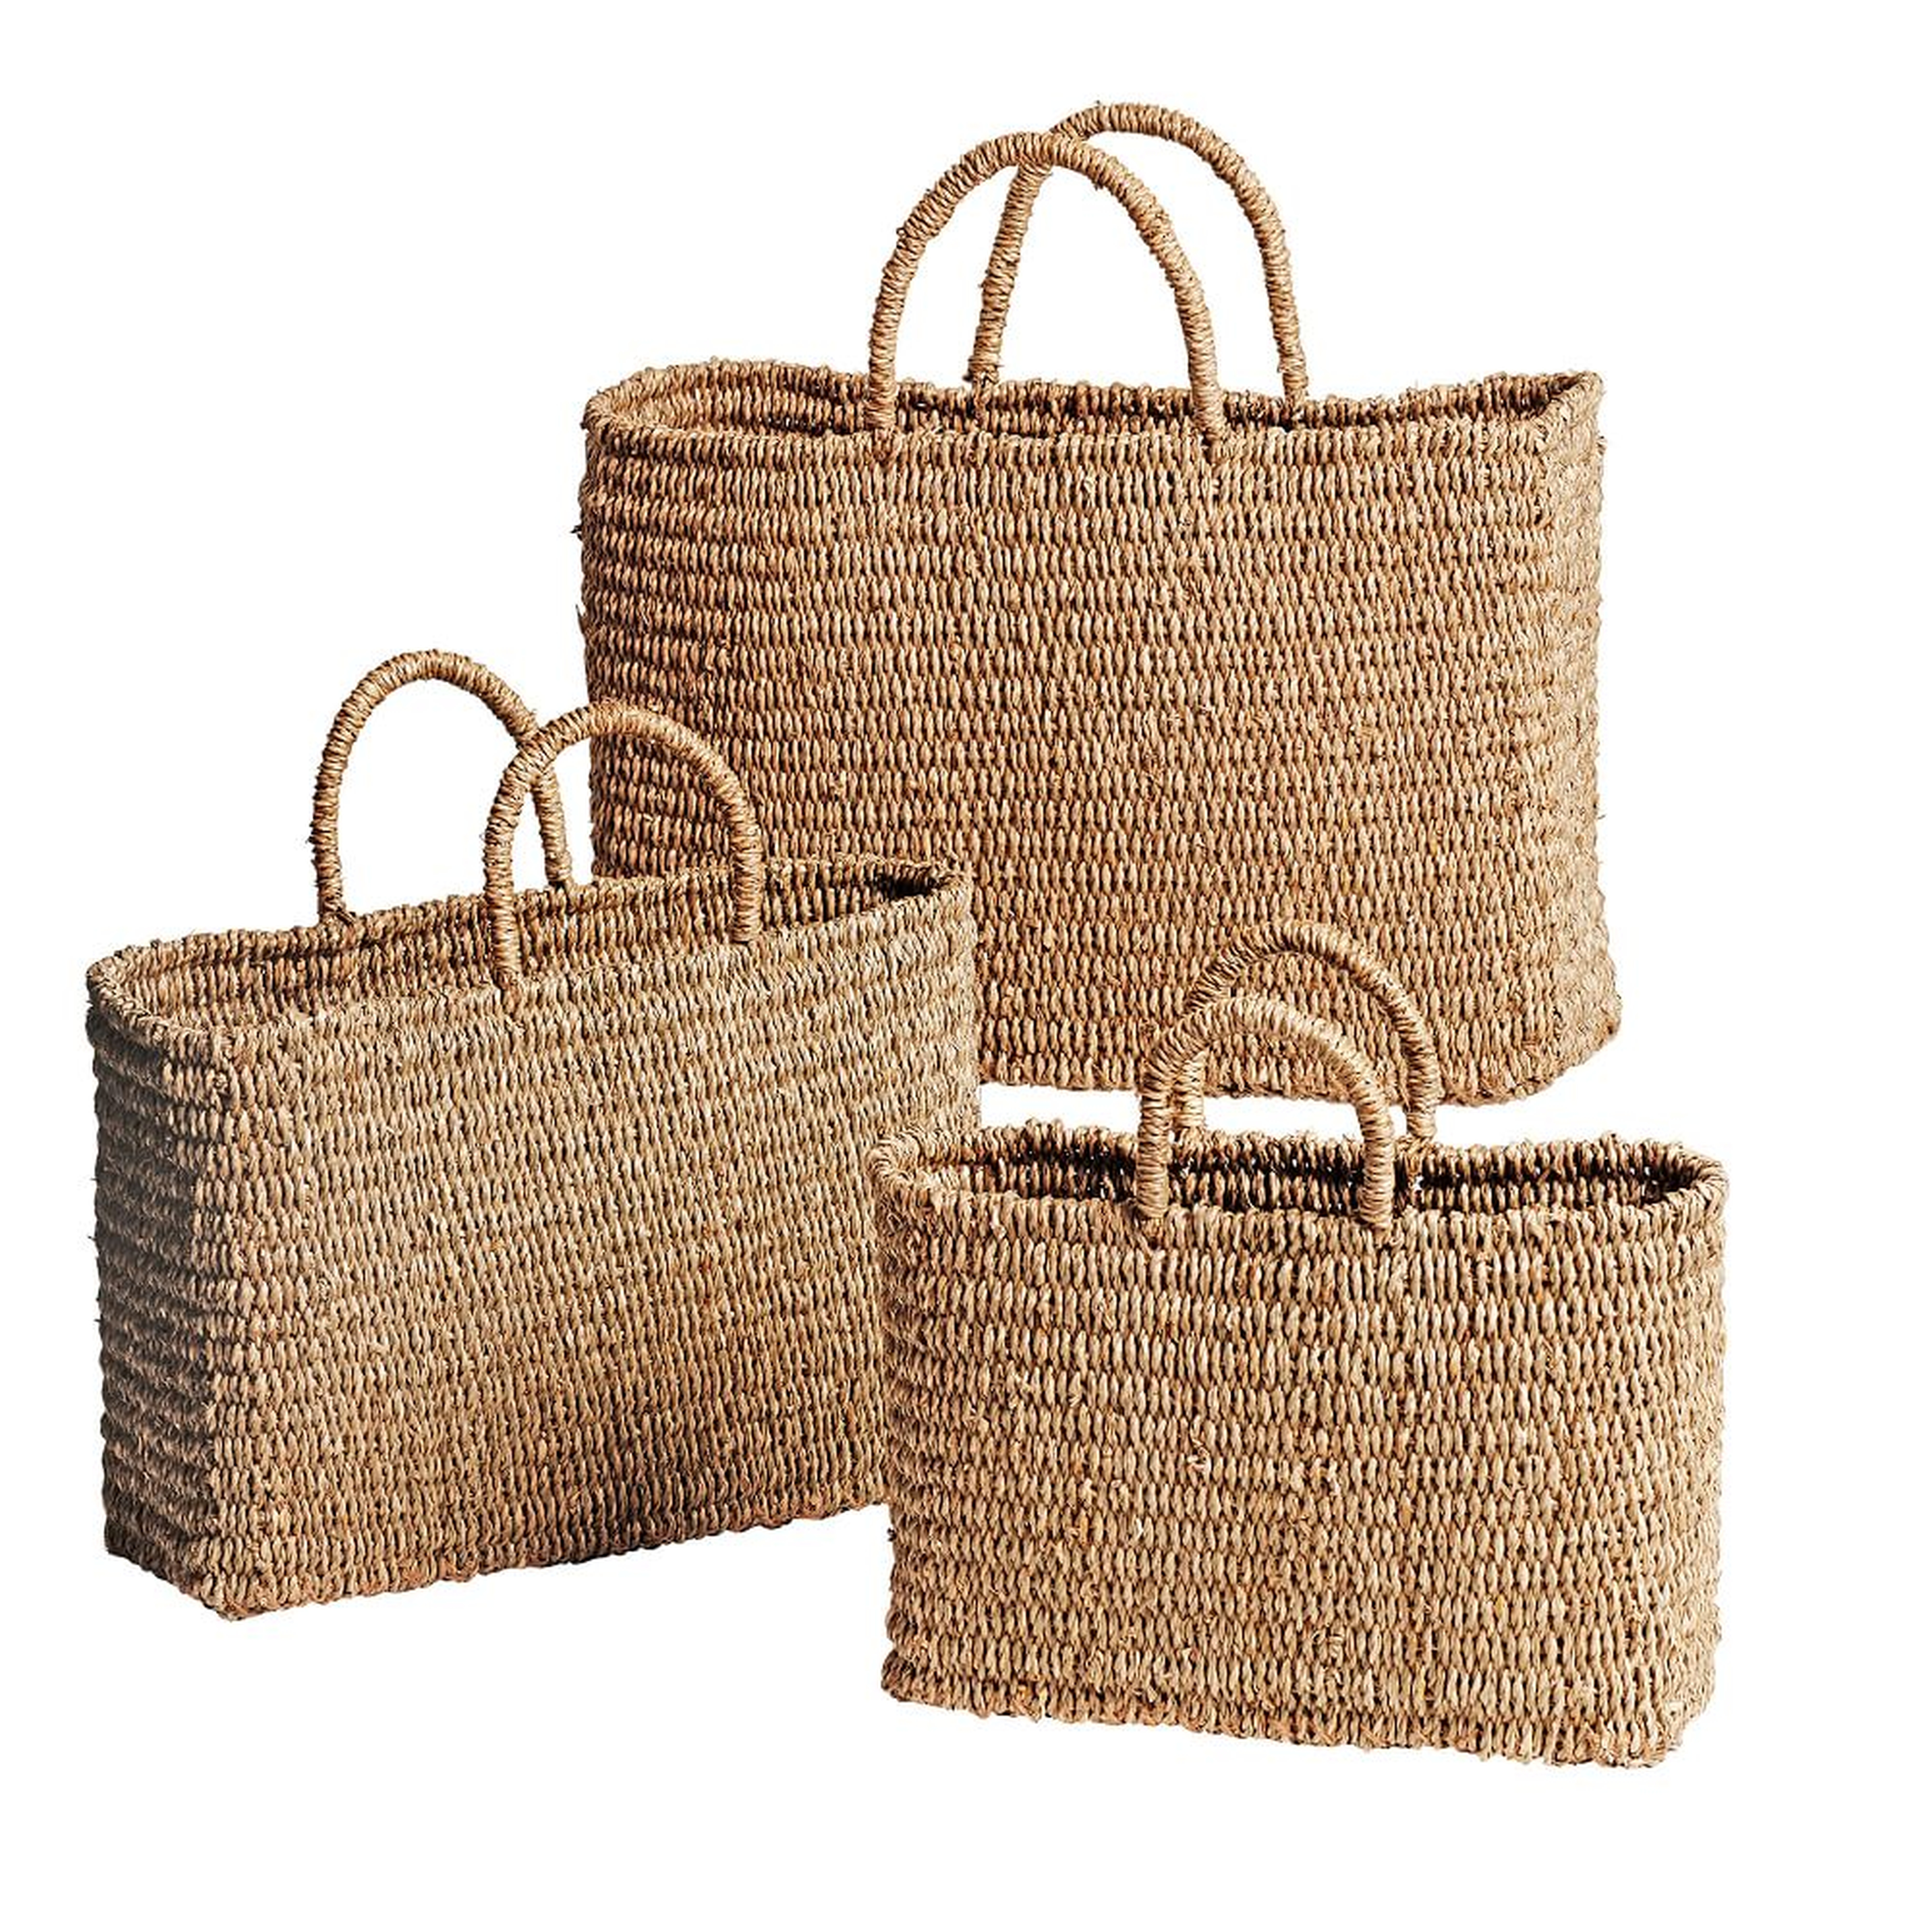 Bimini Baskets, Set Of 3 - West Elm